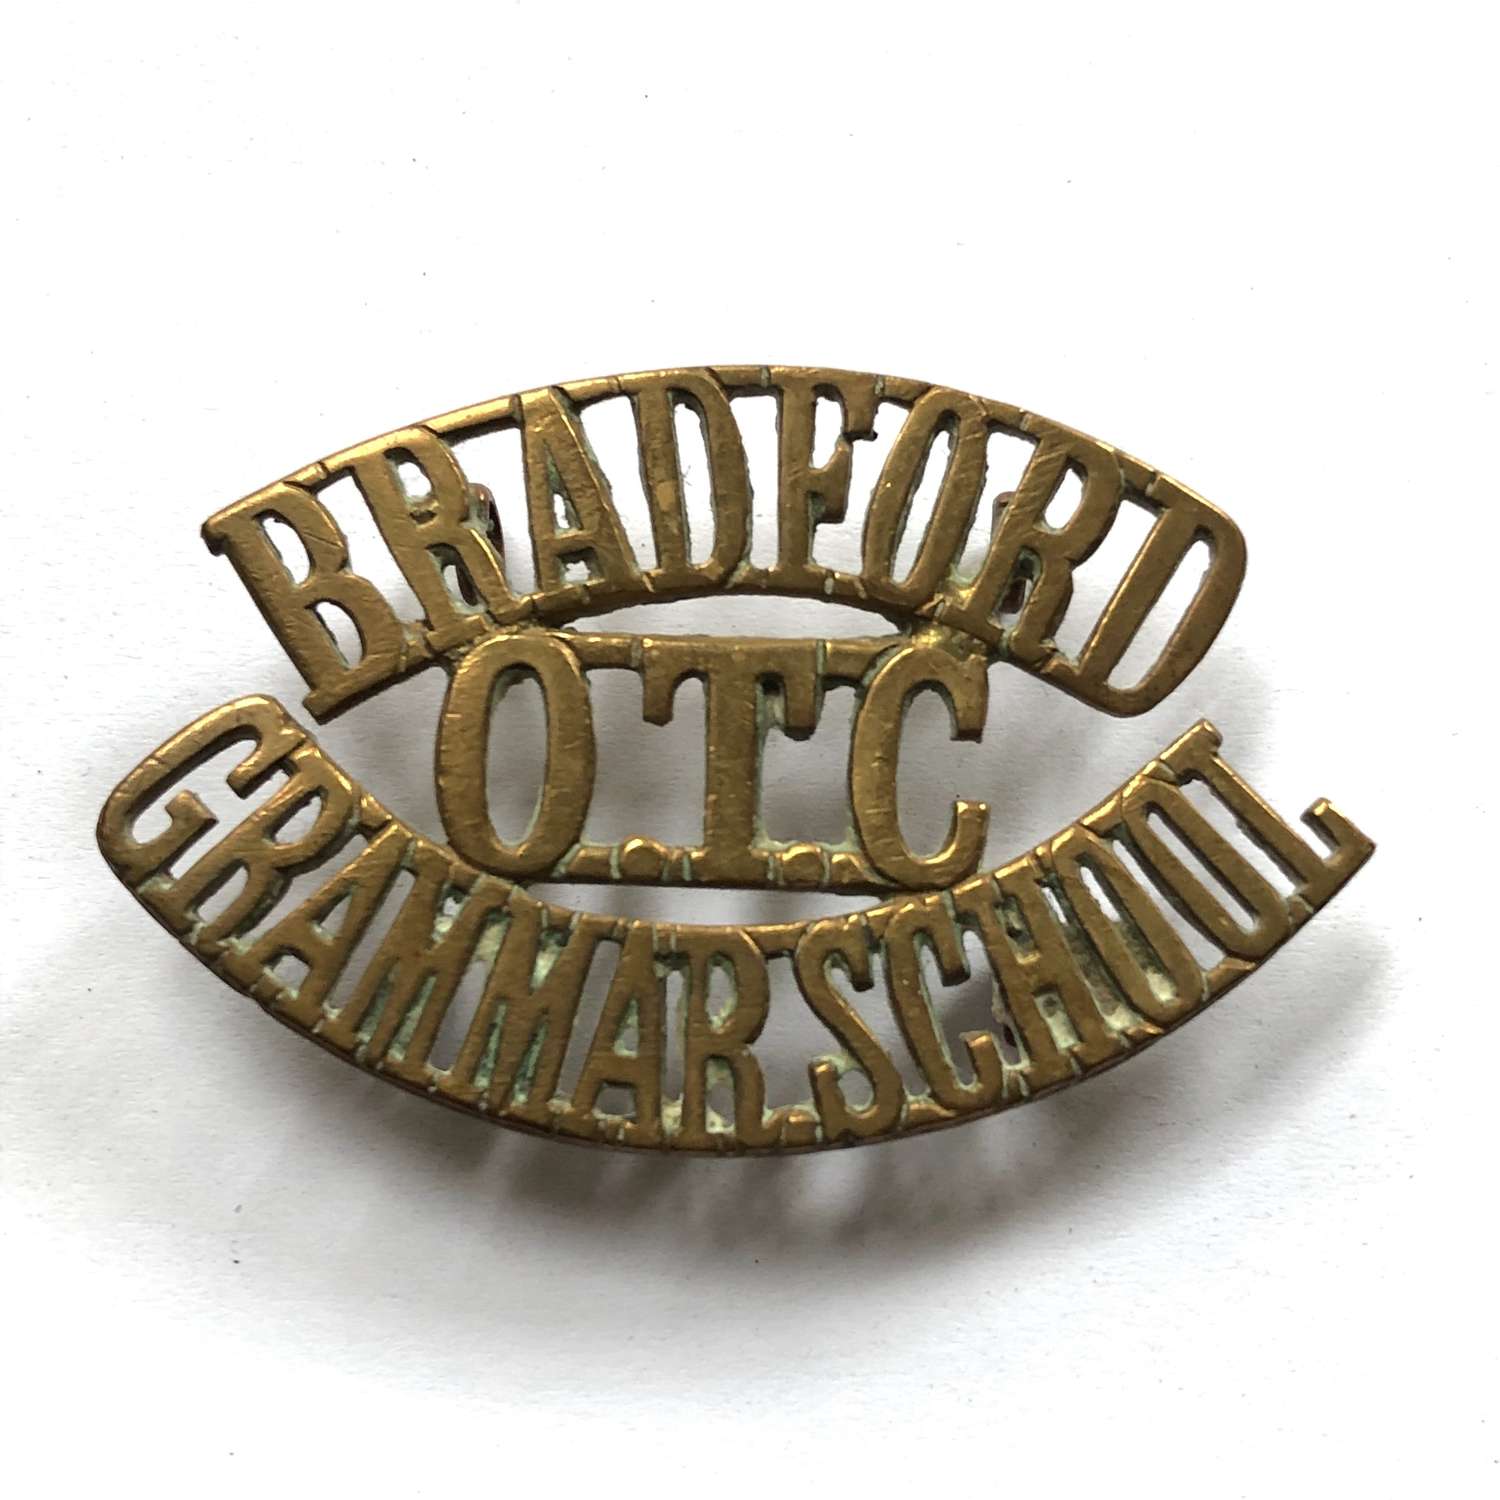 BRADFORD / OTC / GRAMMAR SCHOOL shoulder title c1908-40